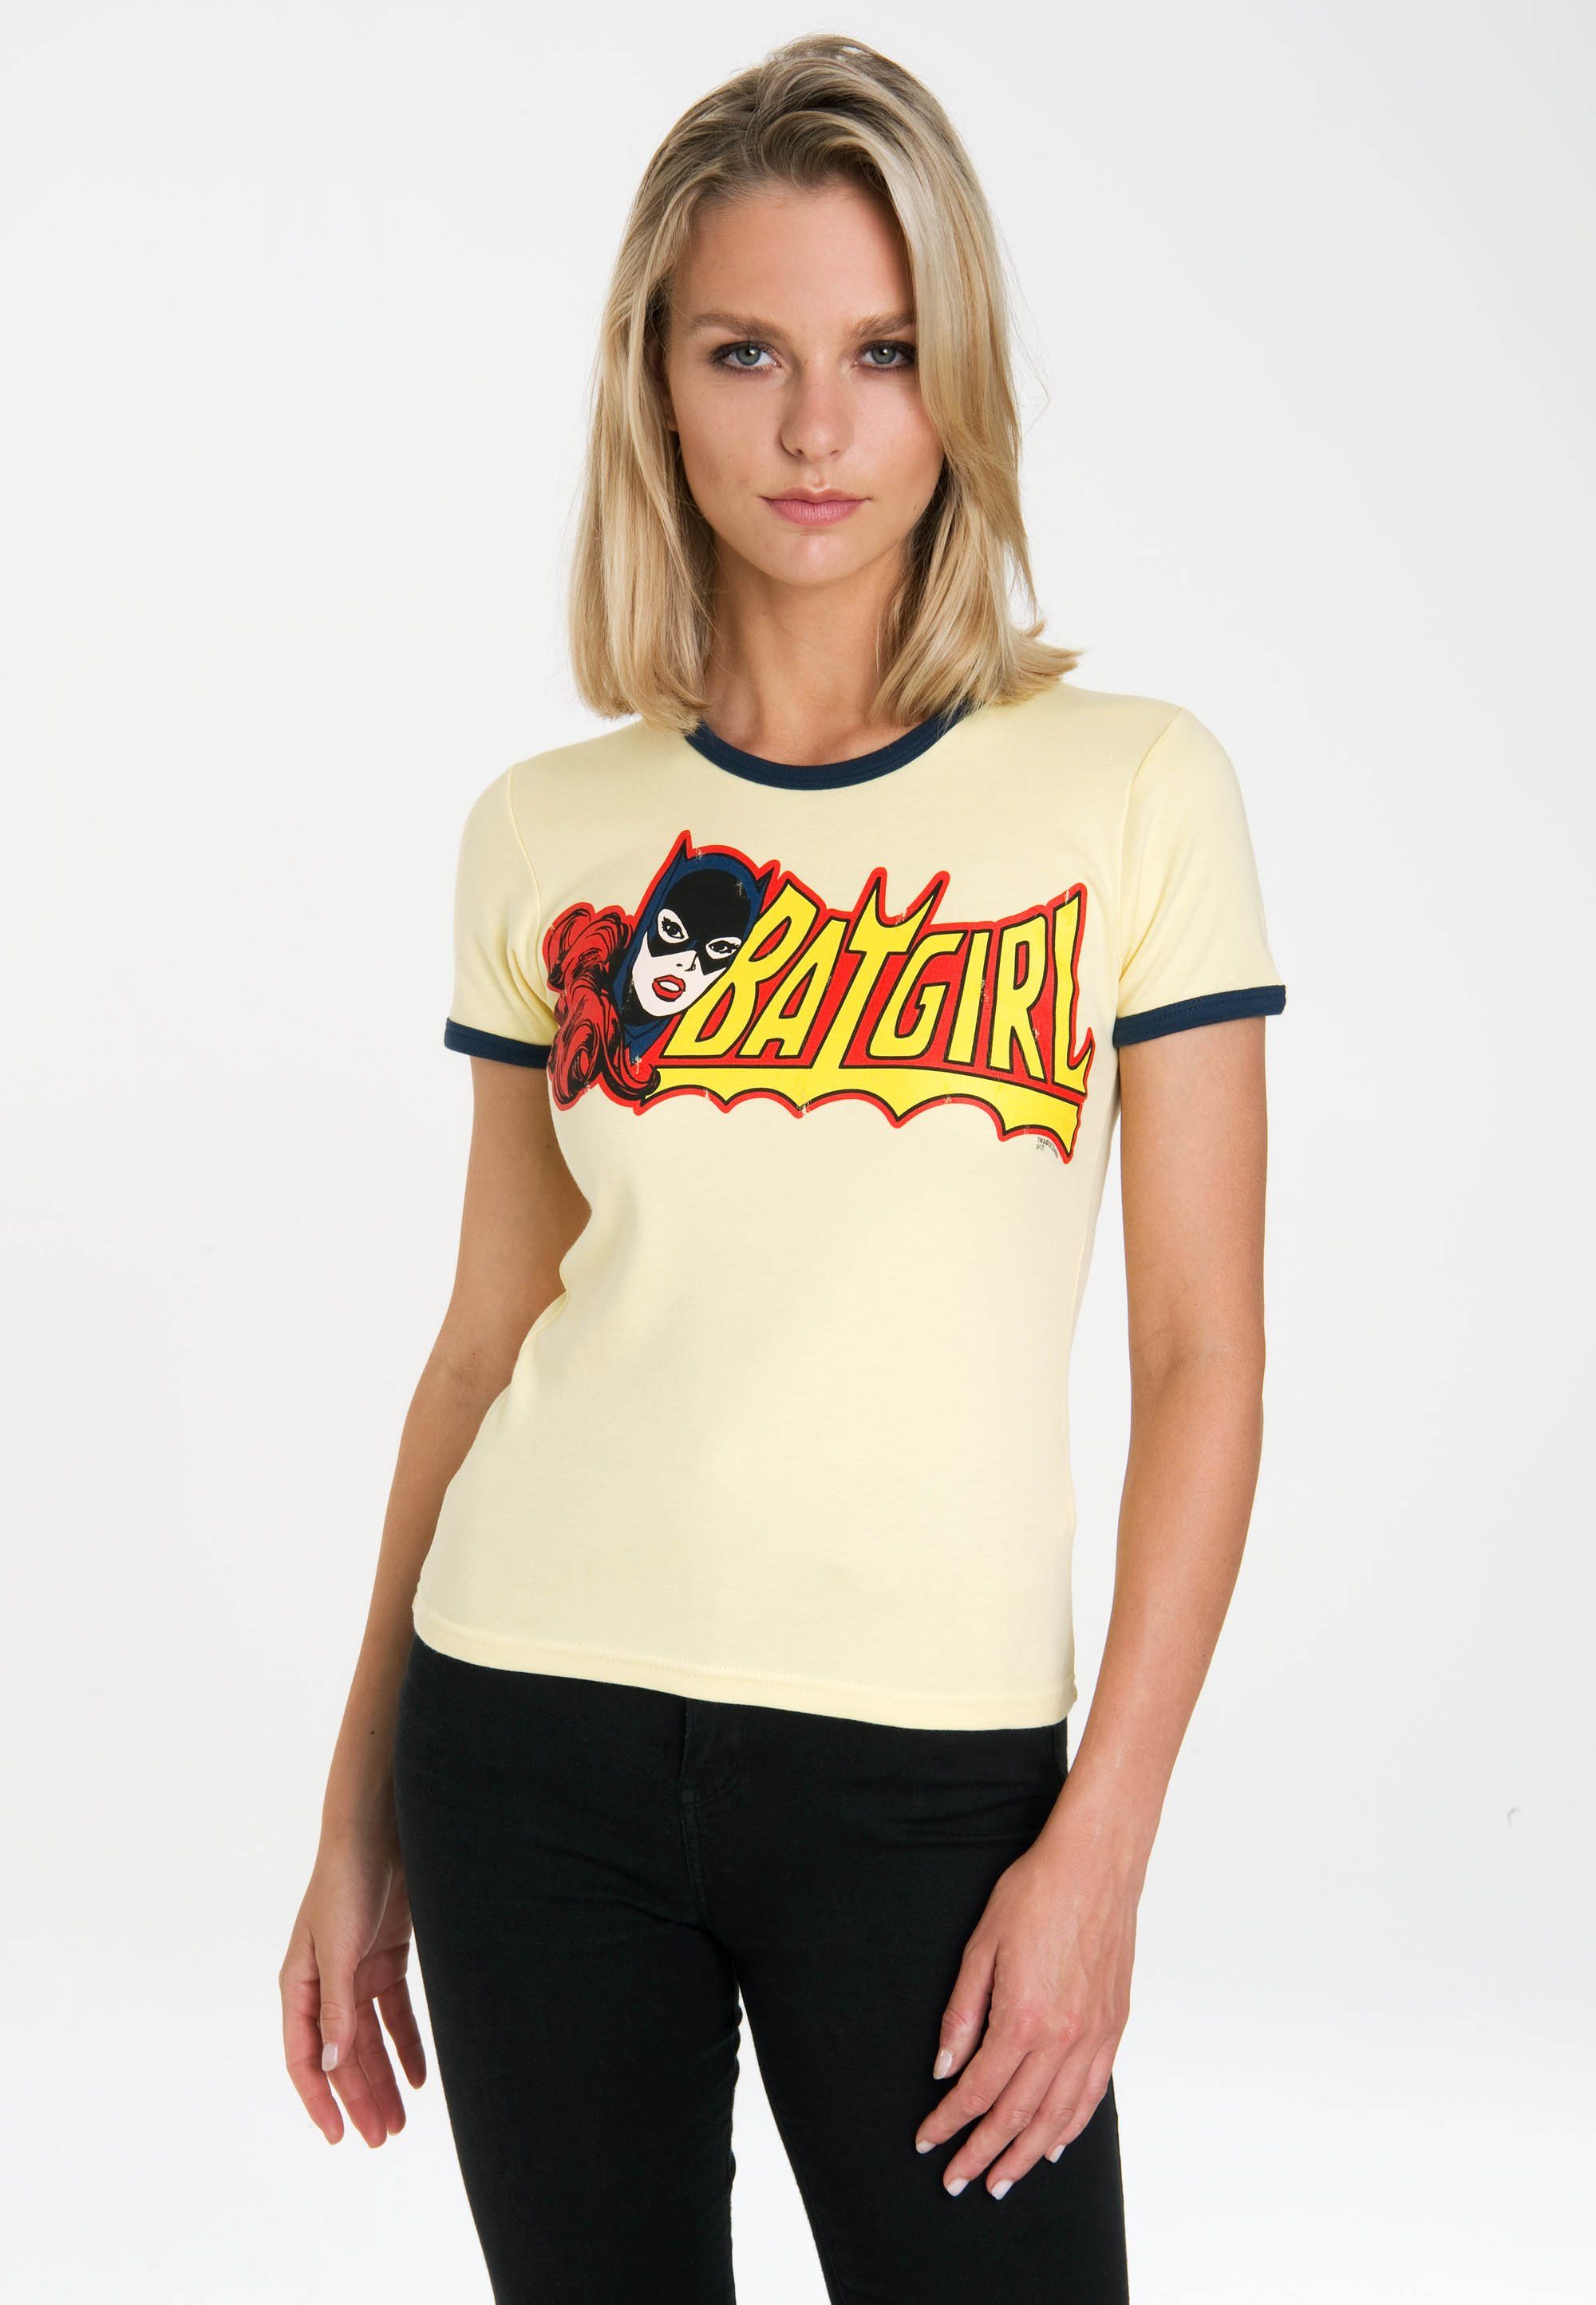 LOGOSHIRT T-Shirt DC Comics mit lizenziertem Originaldesign, Mit großem  Frontprint ein knalliges Highlight